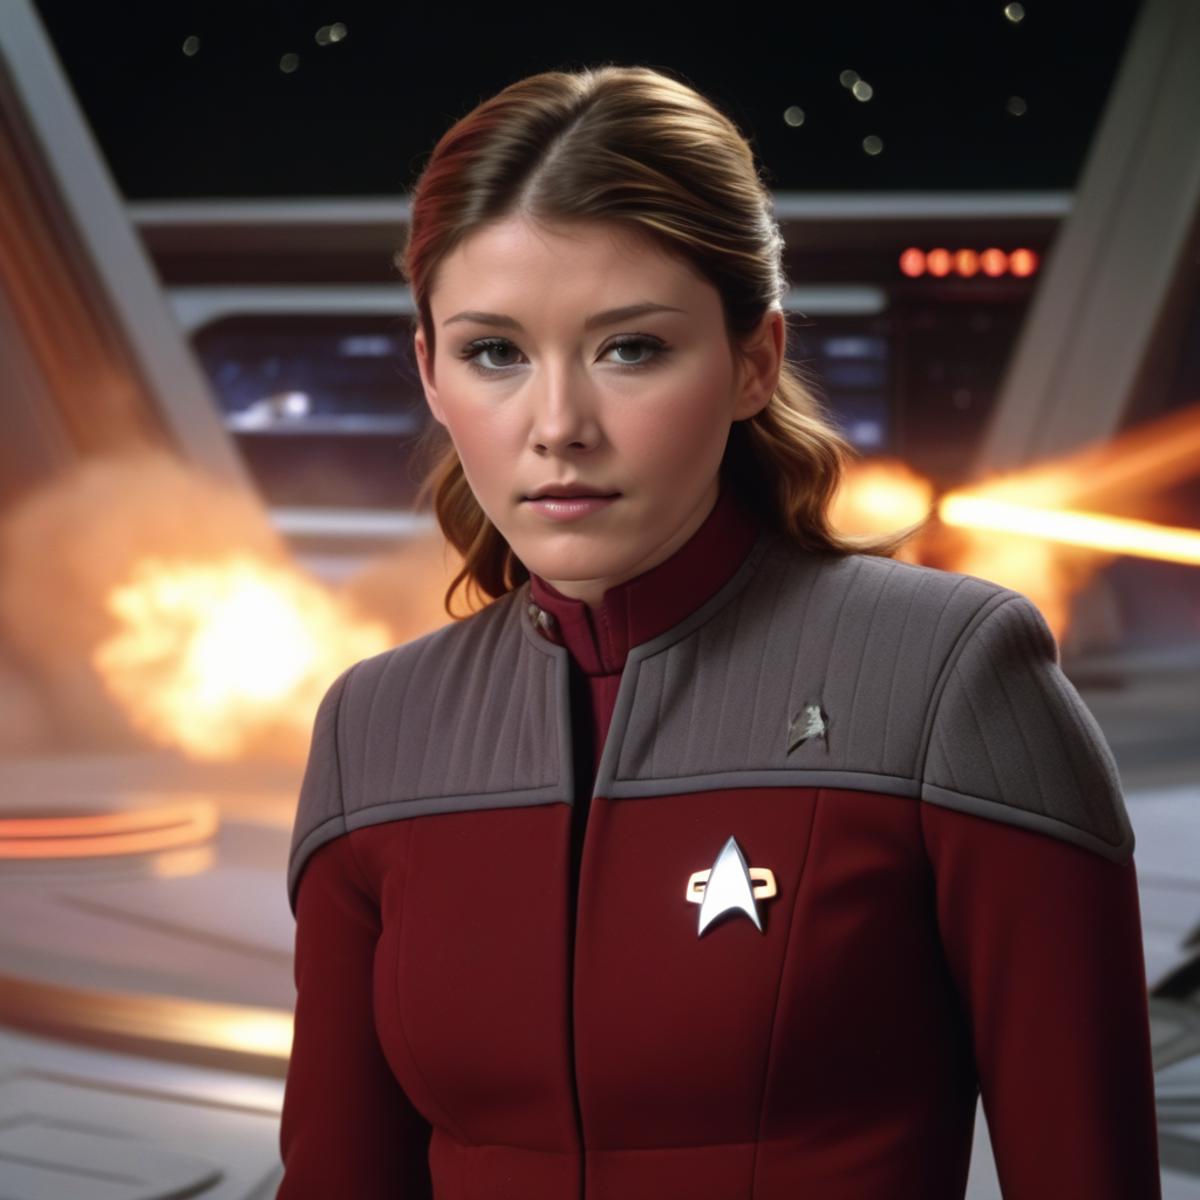 Star Trek DS9 uniforms (XL) image by kamikazey